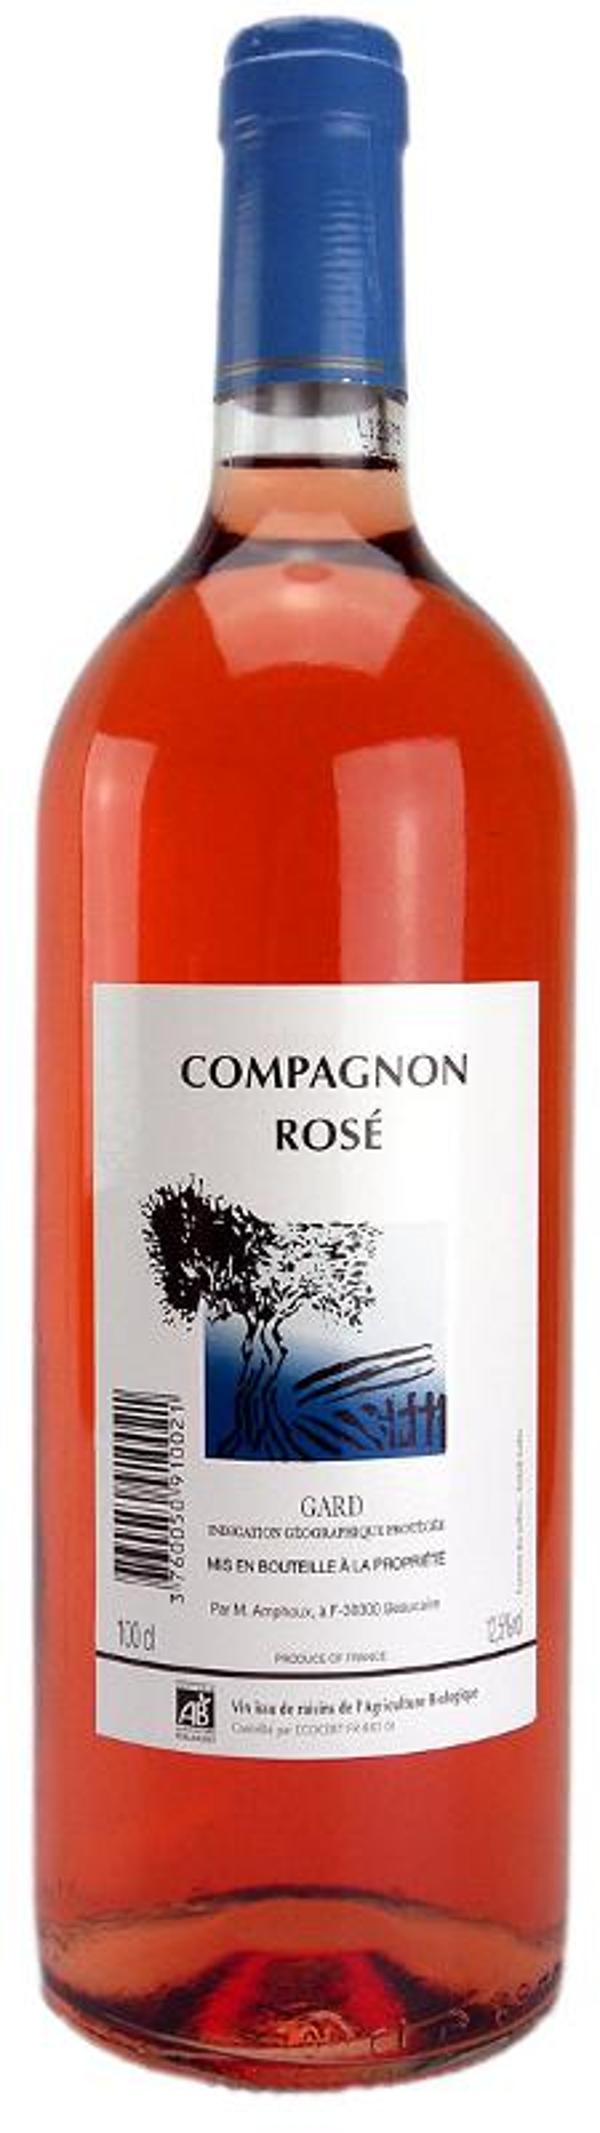 Produktfoto zu Compagnon rosé